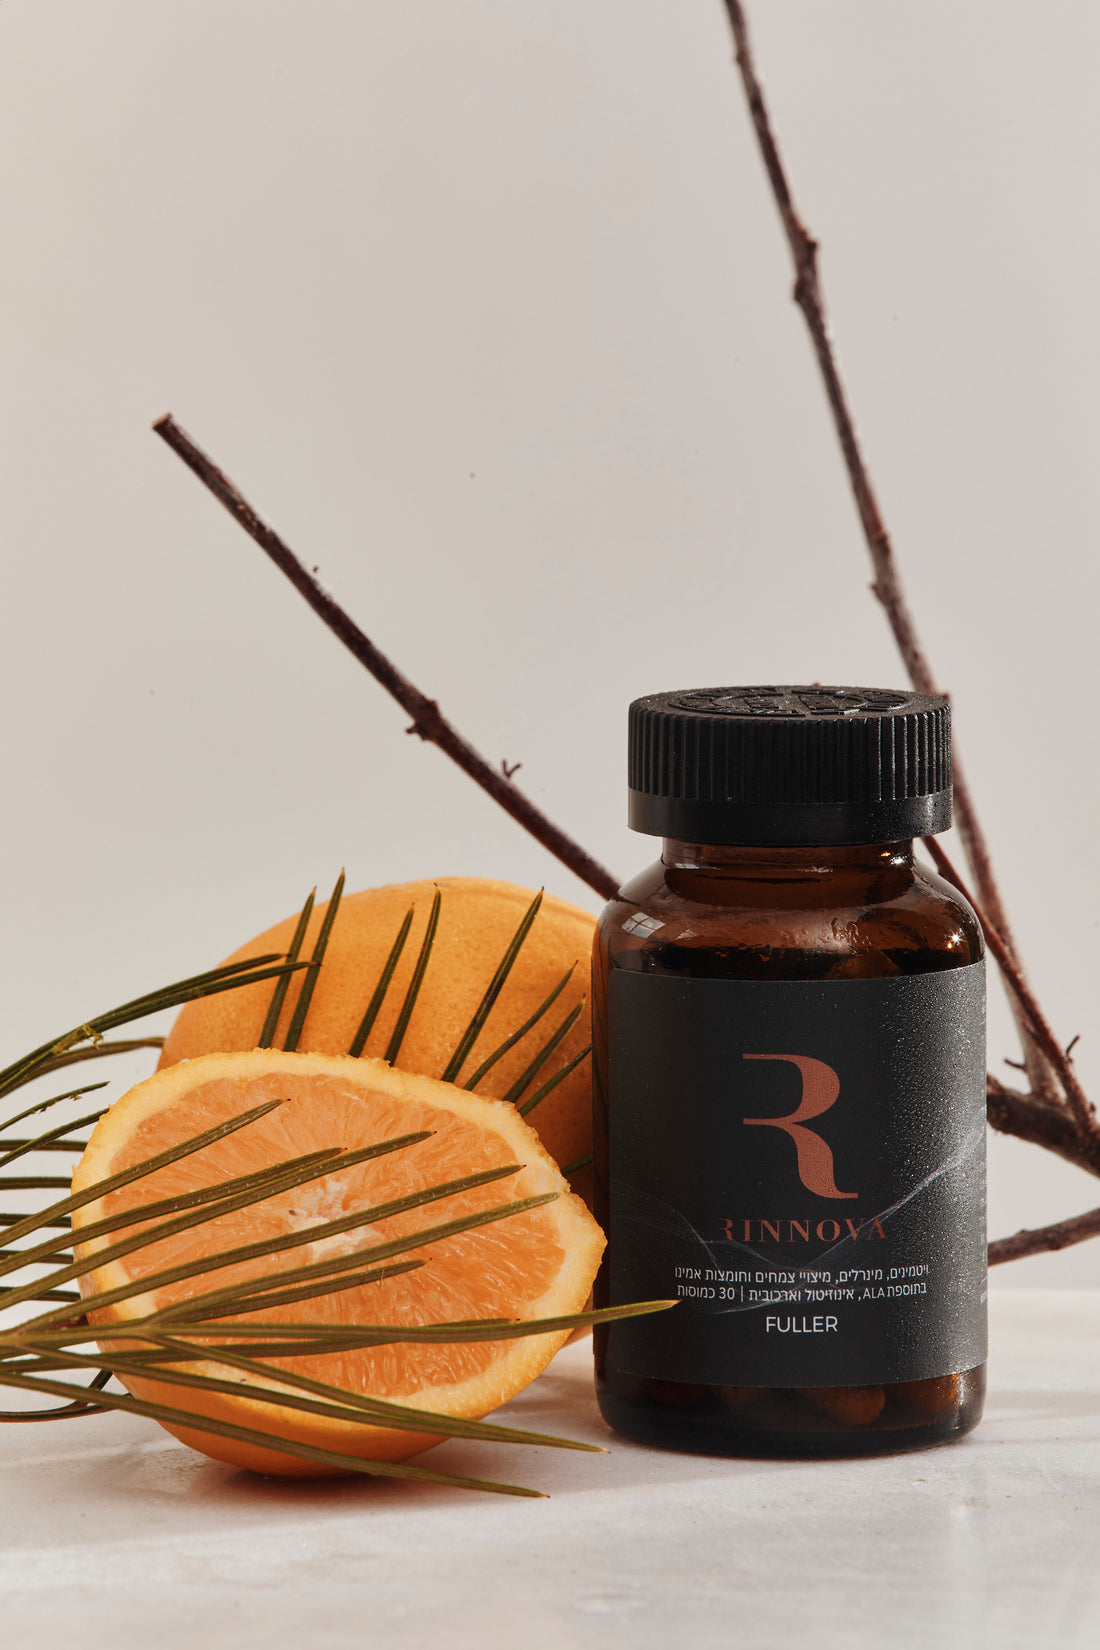 rinnova רינובה - Fuller תוסף תזונה טבעי לשיקום וחיזוק השיער.